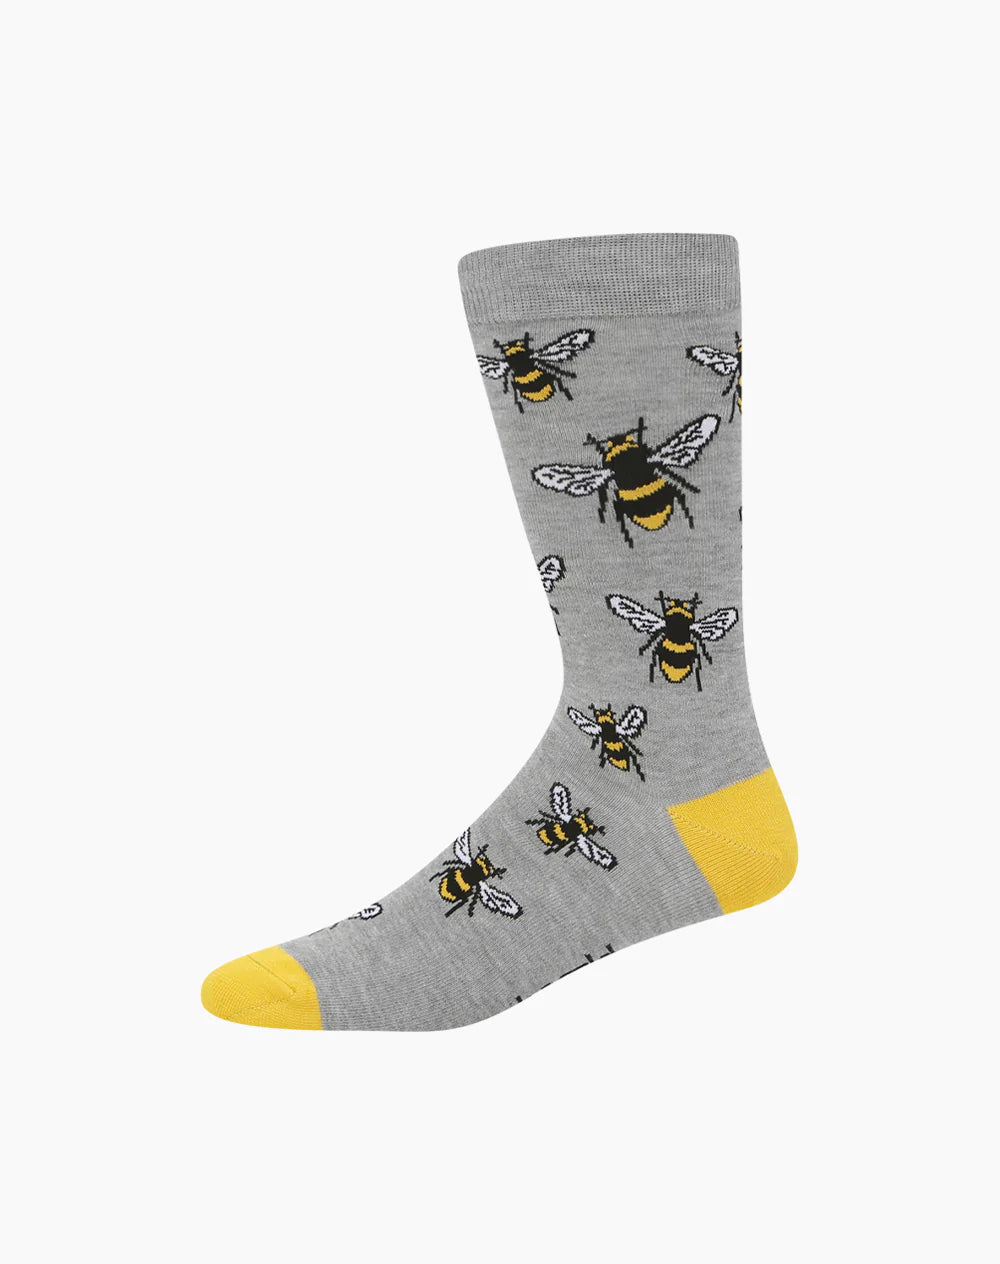 Bumble Bee Men's Bamboo Crew Socks - The Sockery